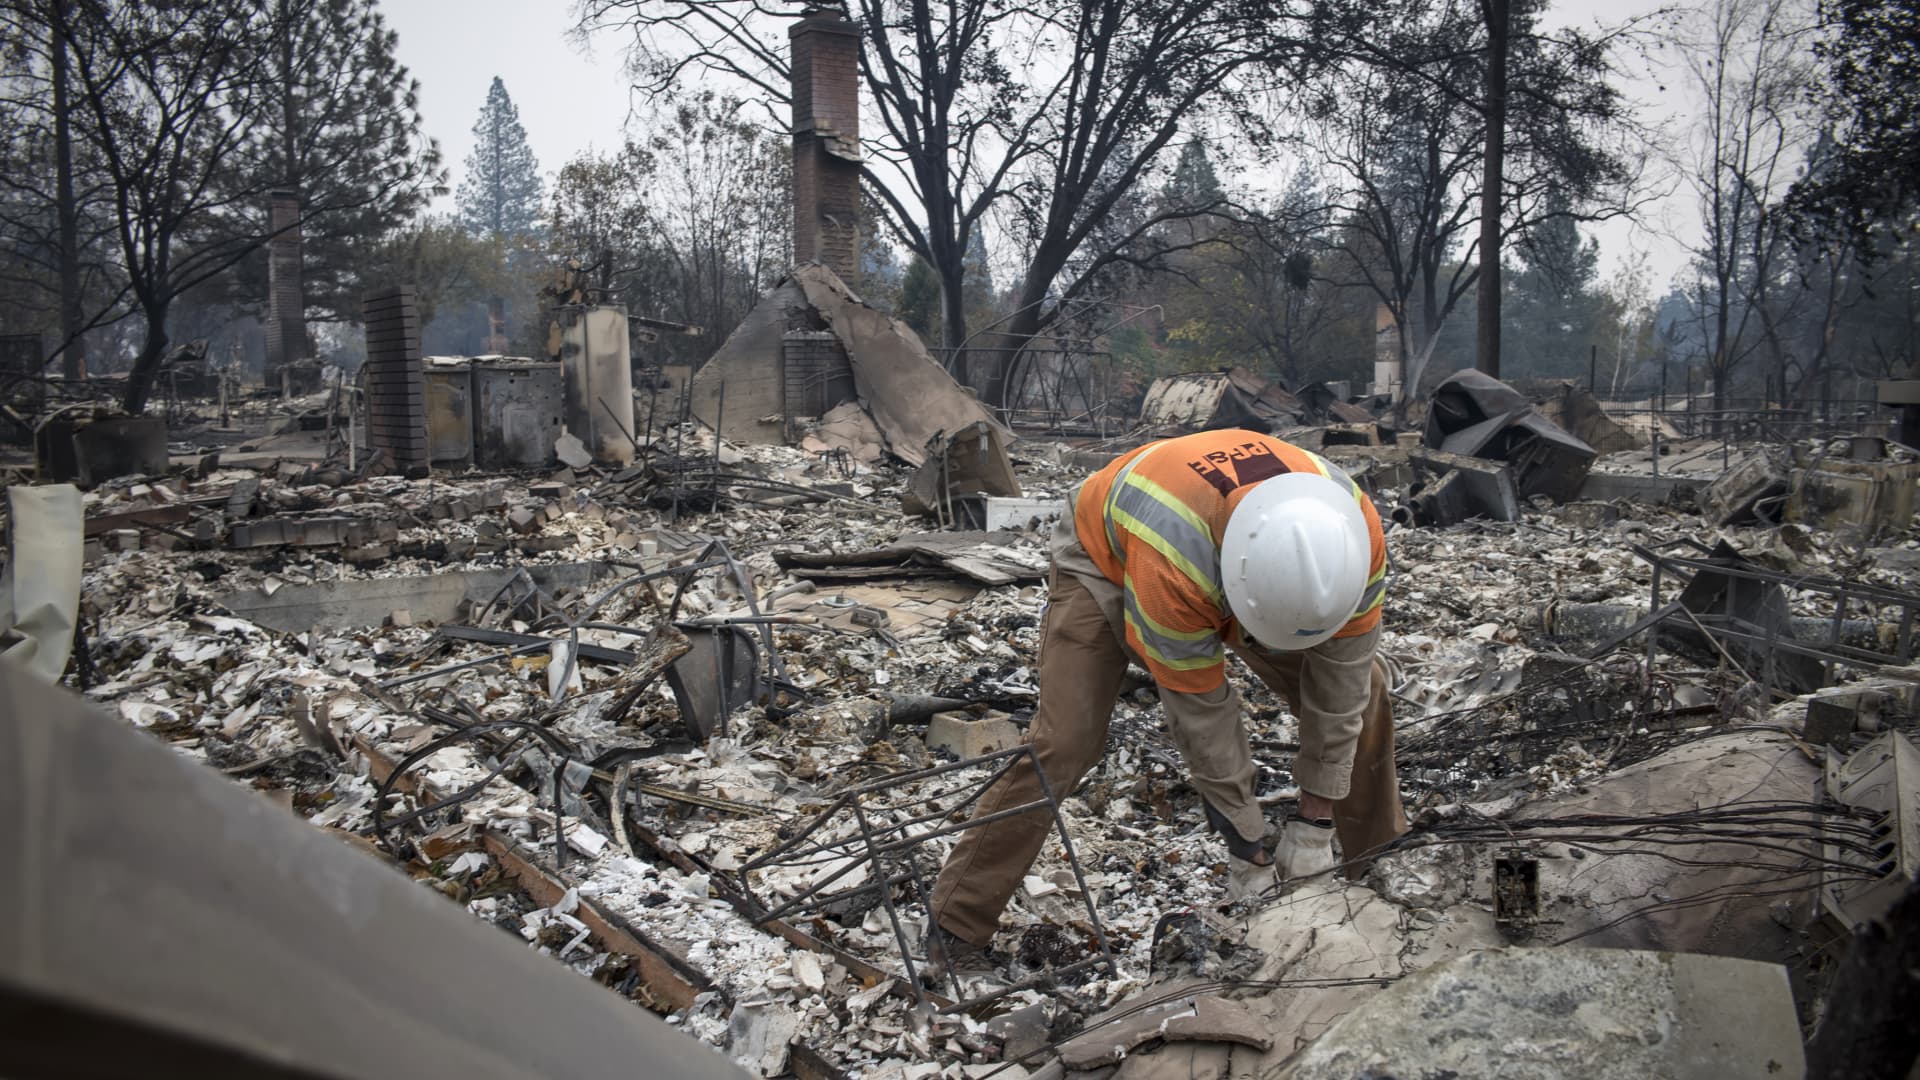 Public utilities fall short on wildfire risk mitigation